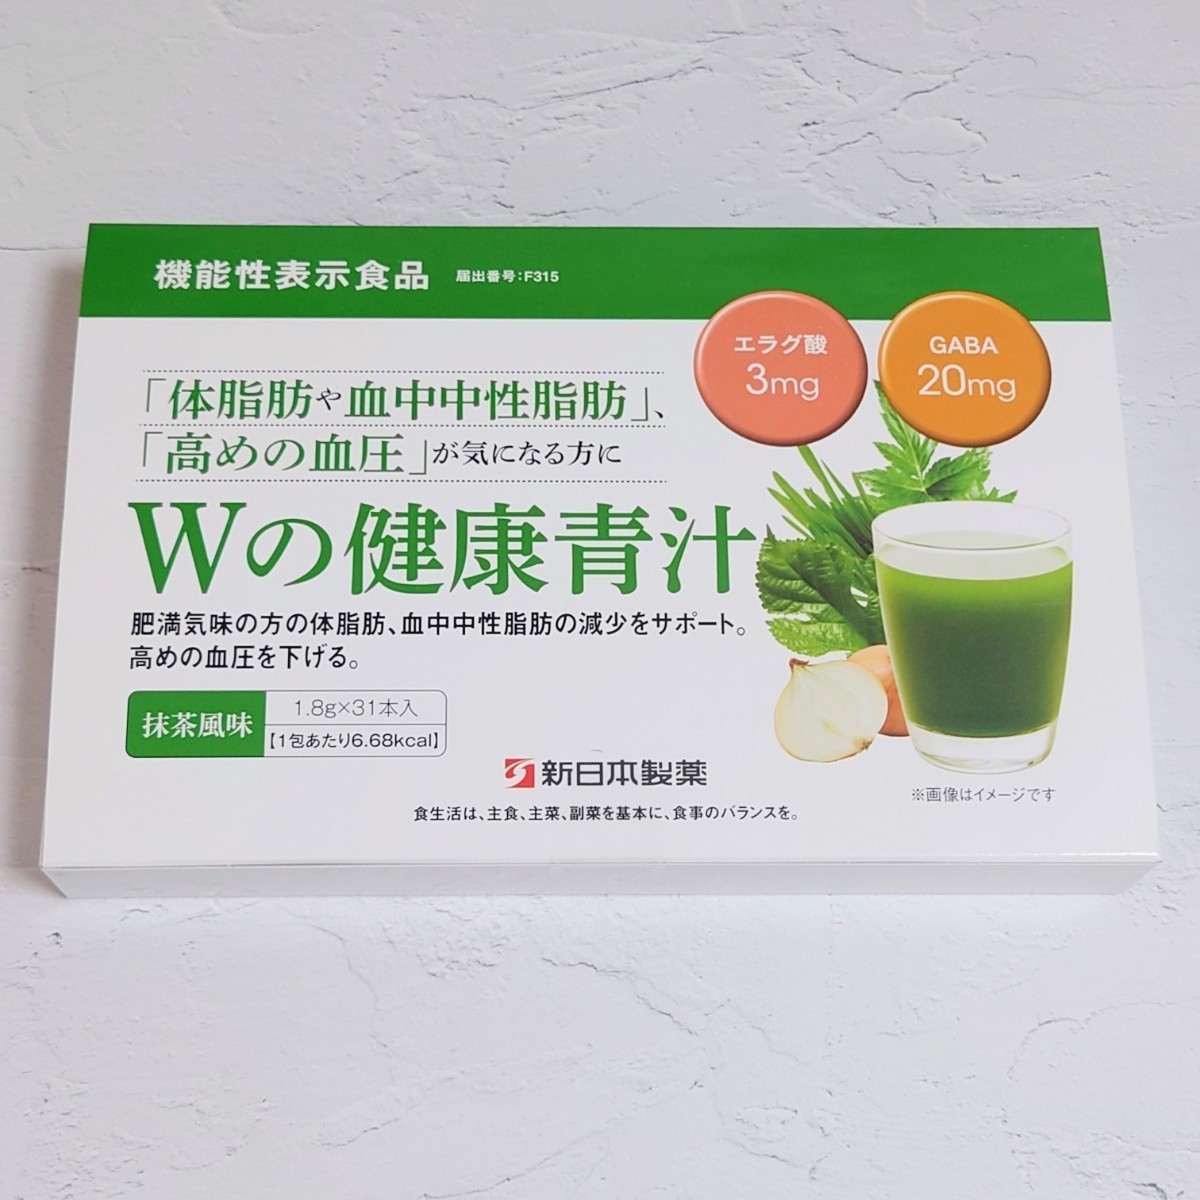 W. health green juice domestic production internal organs fat . diet high blood pressure powder 